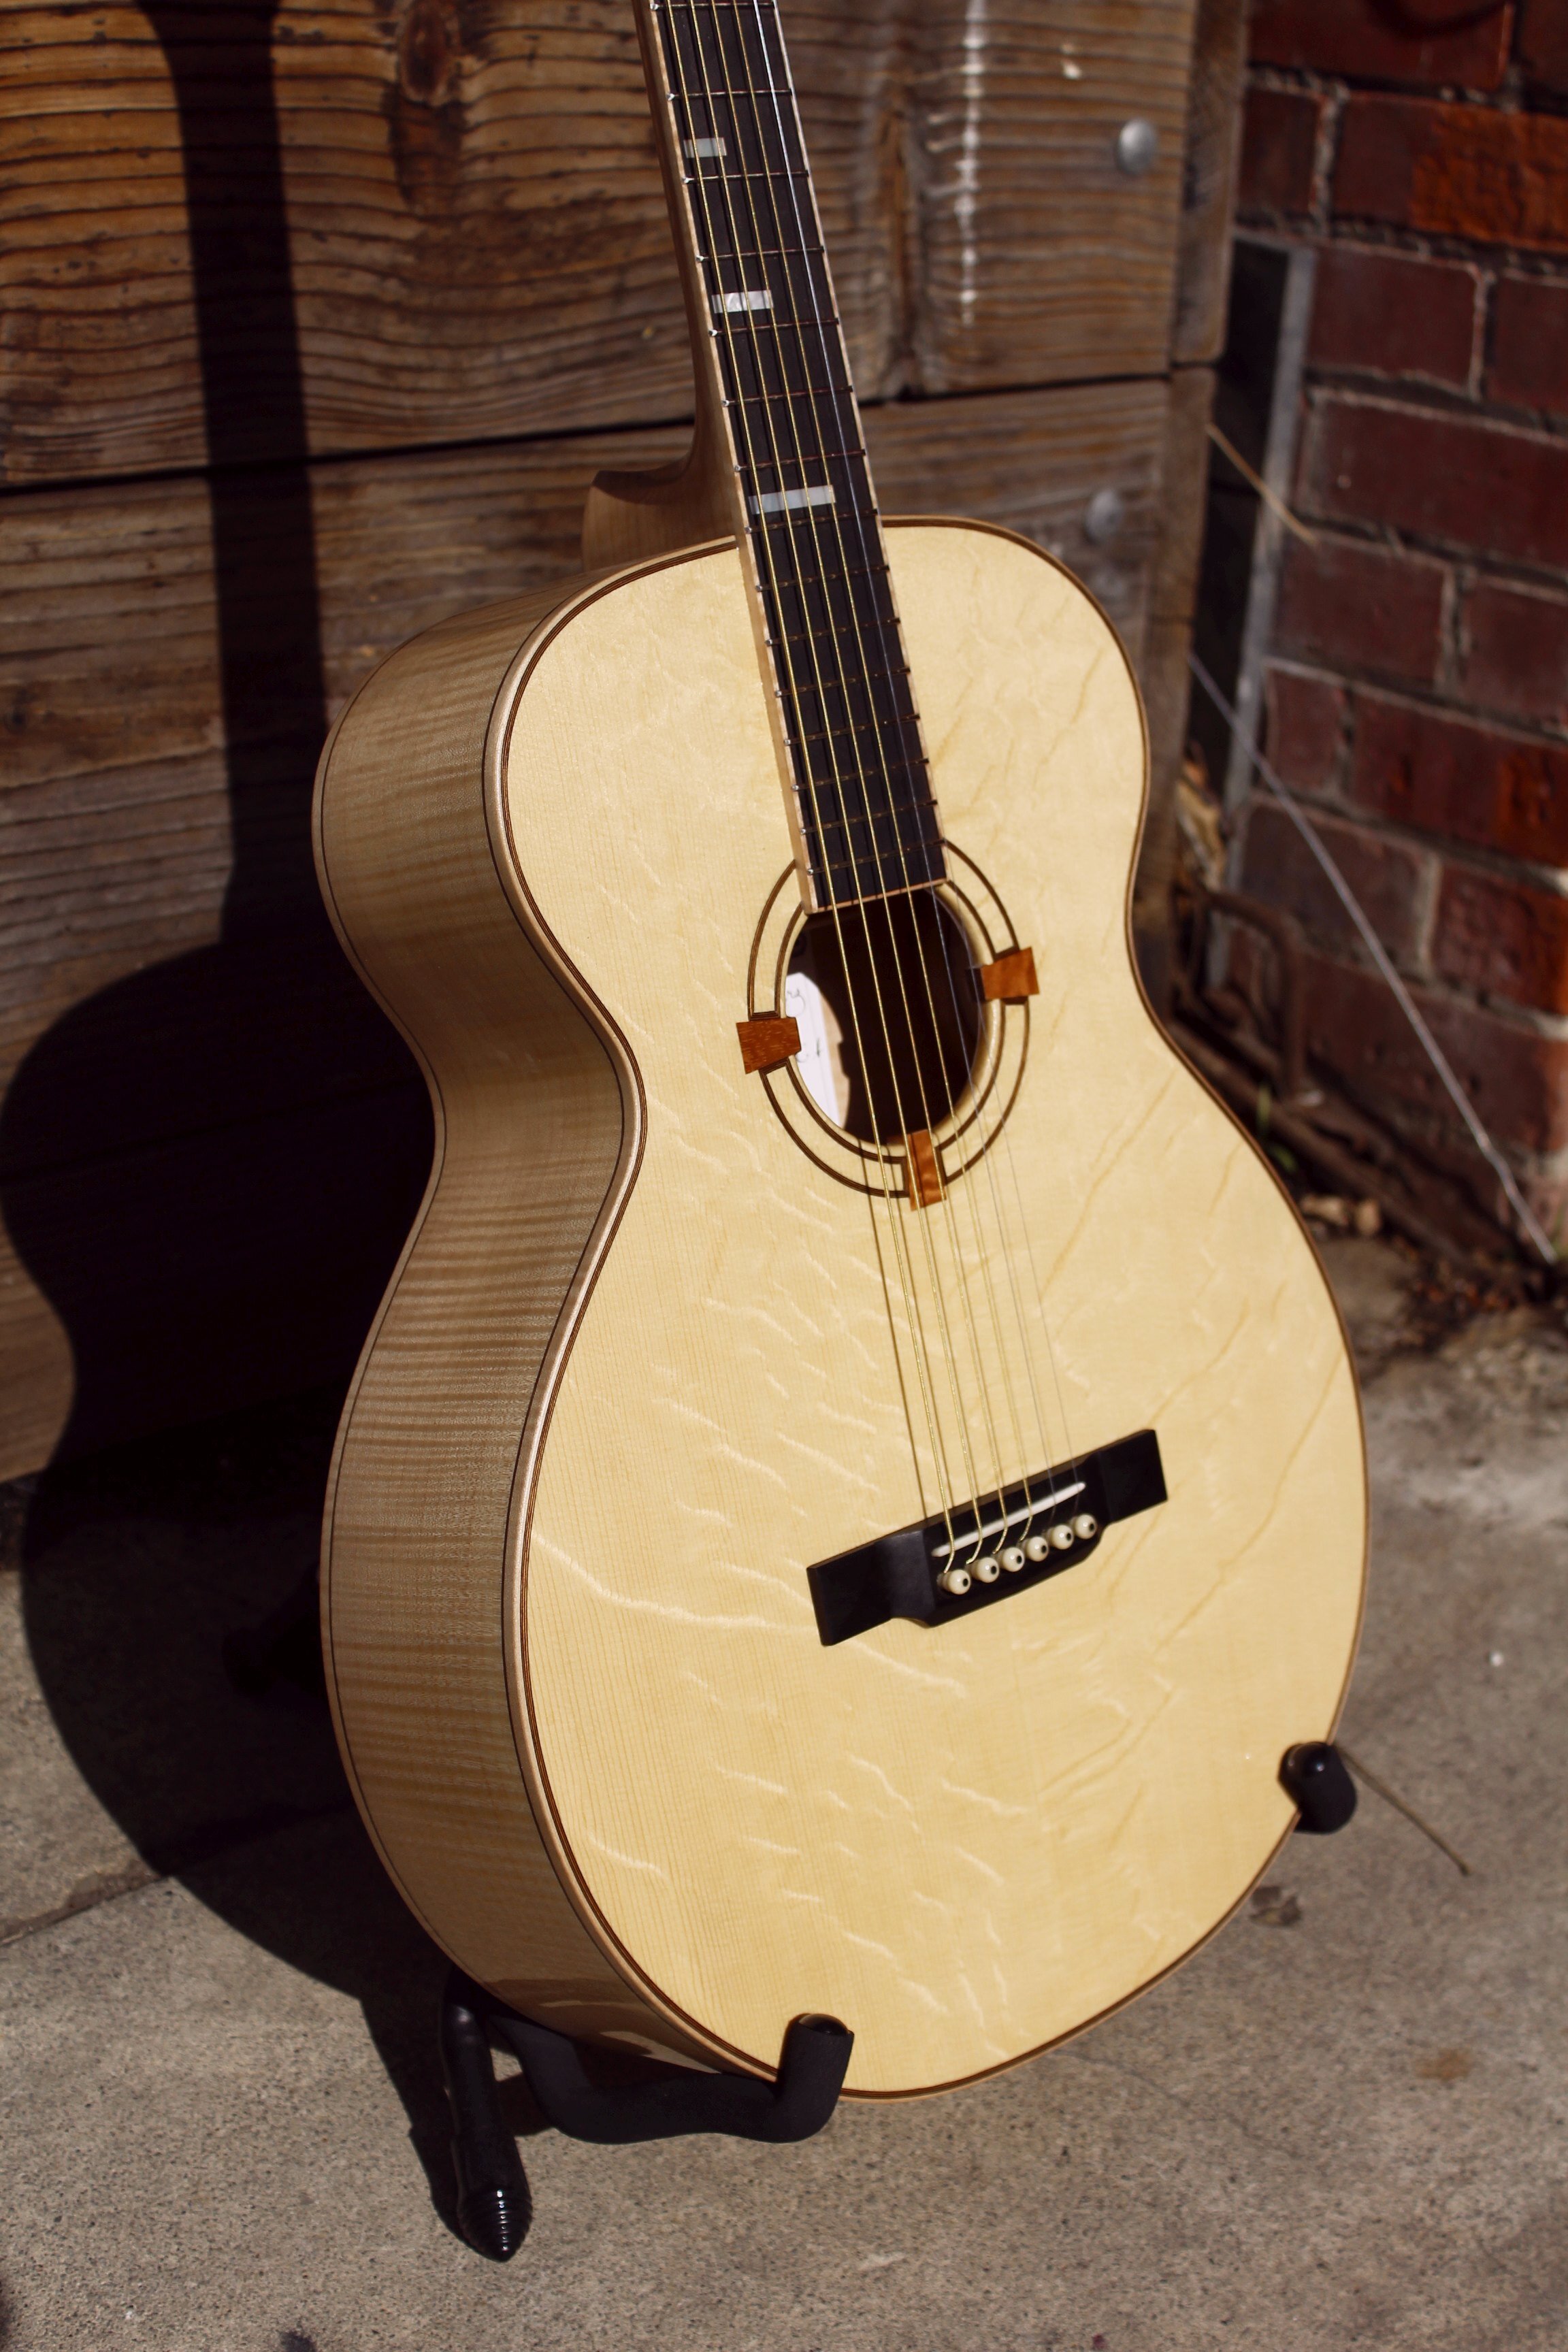 bearclaw-engelmann-spruce-custom-steel-string-guitar